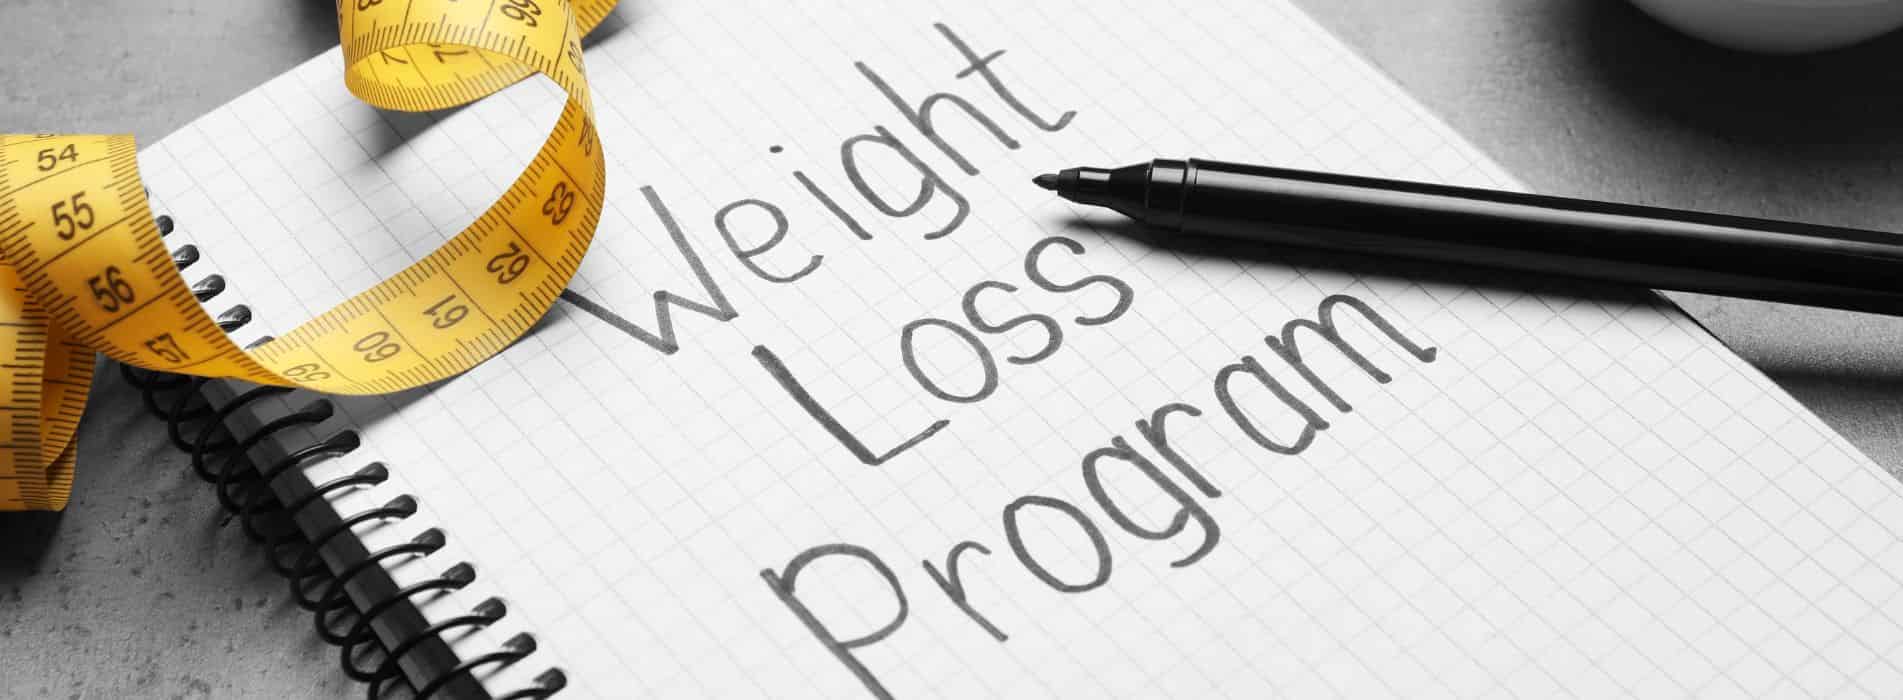 weight loss programs